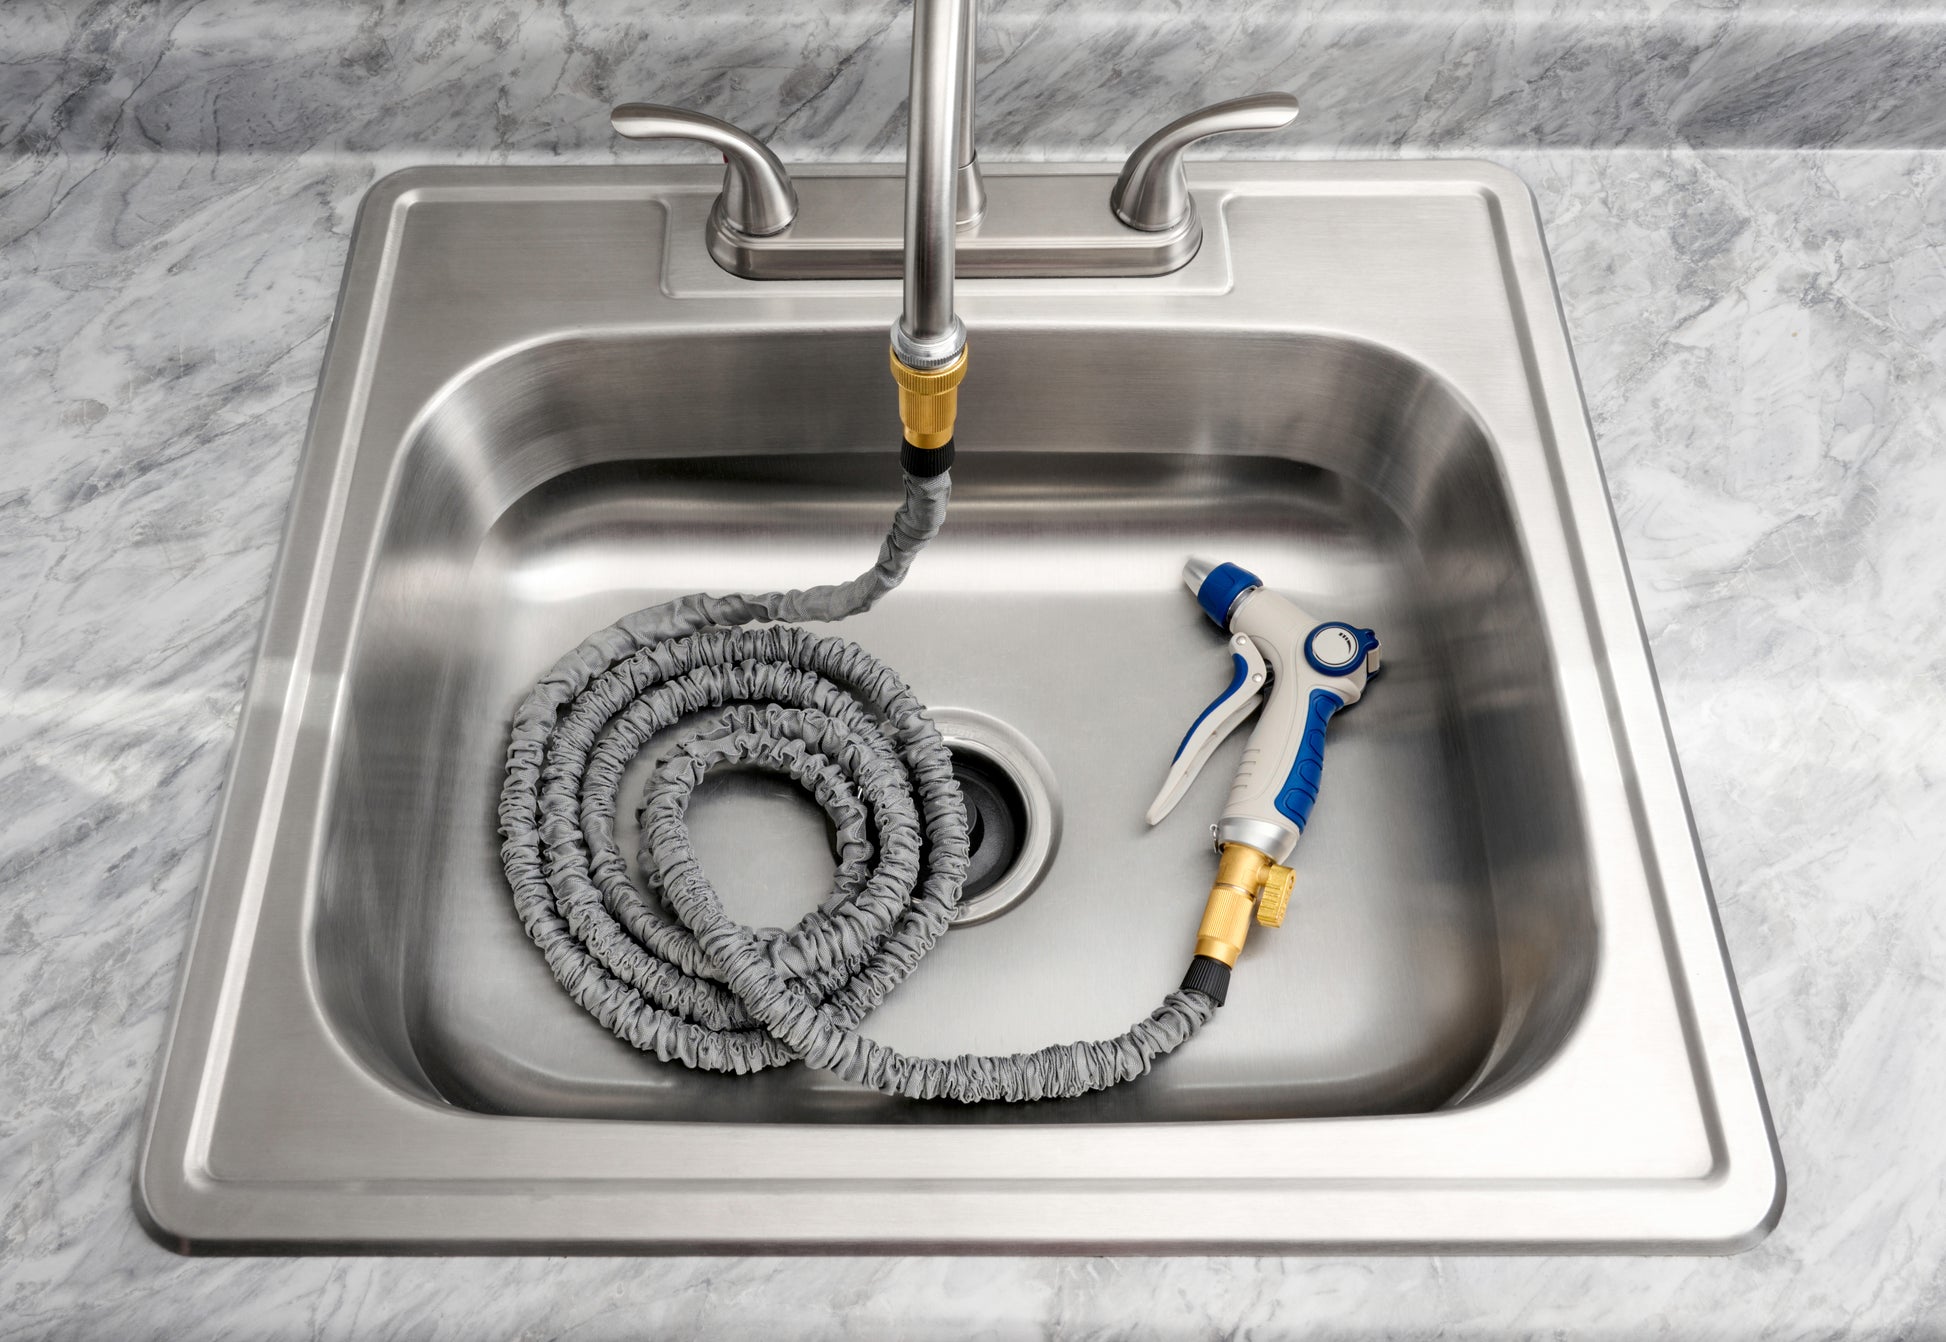 How to attach a garden hose to kitchen sink or bathroom sink video